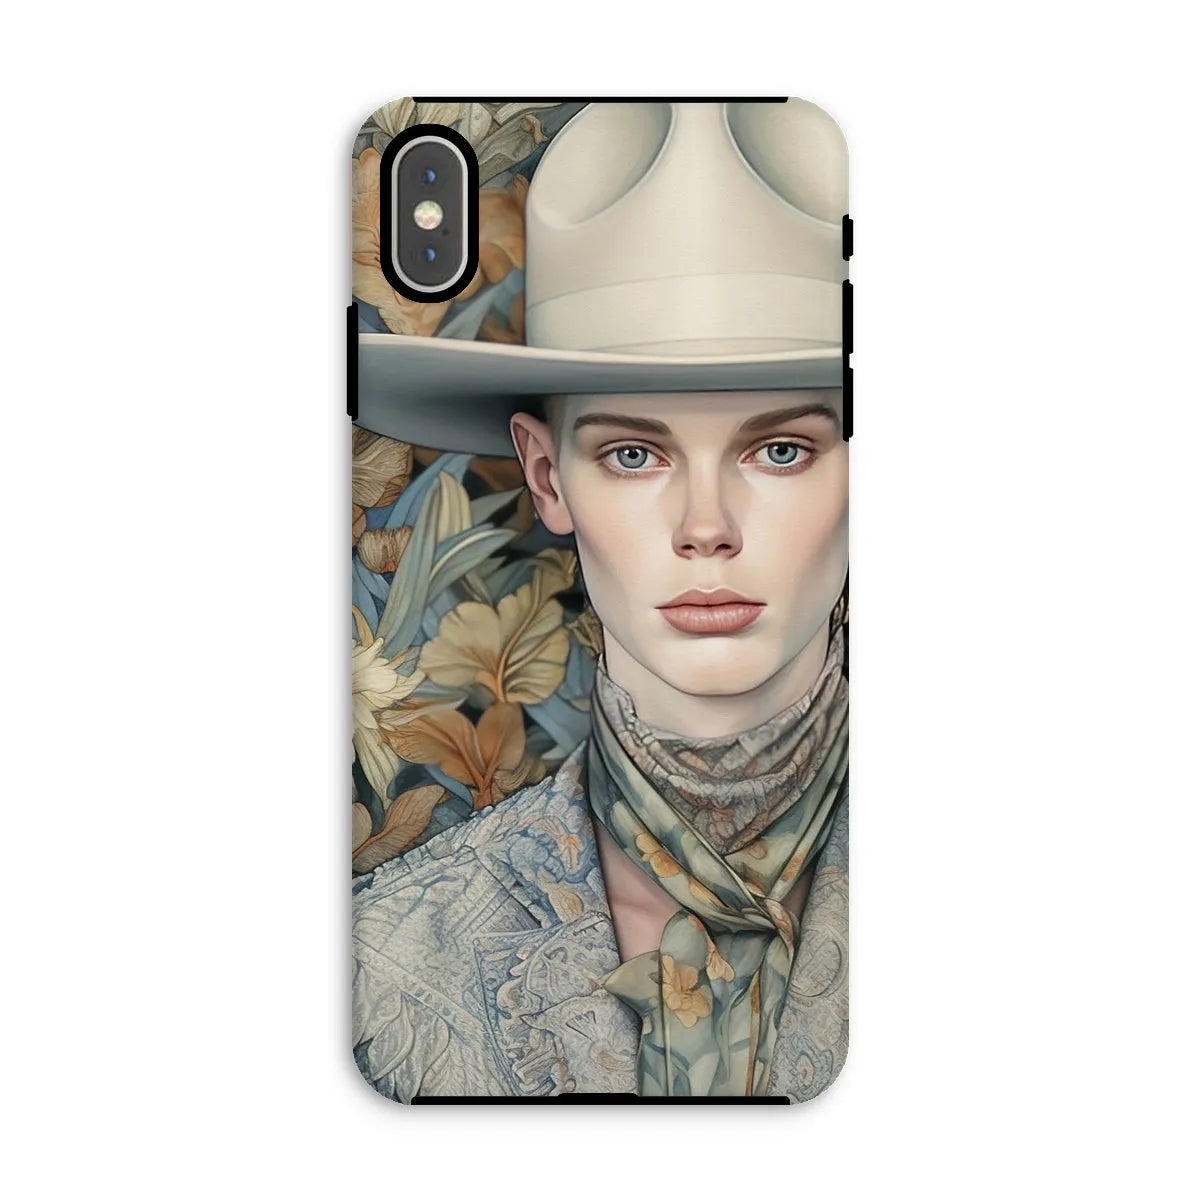 Jasper The Gay Cowboy - Dandy Gay Aesthetic Art Phone Case - Iphone Xs Max / Matte - Mobile Phone Cases - Aesthetic Art